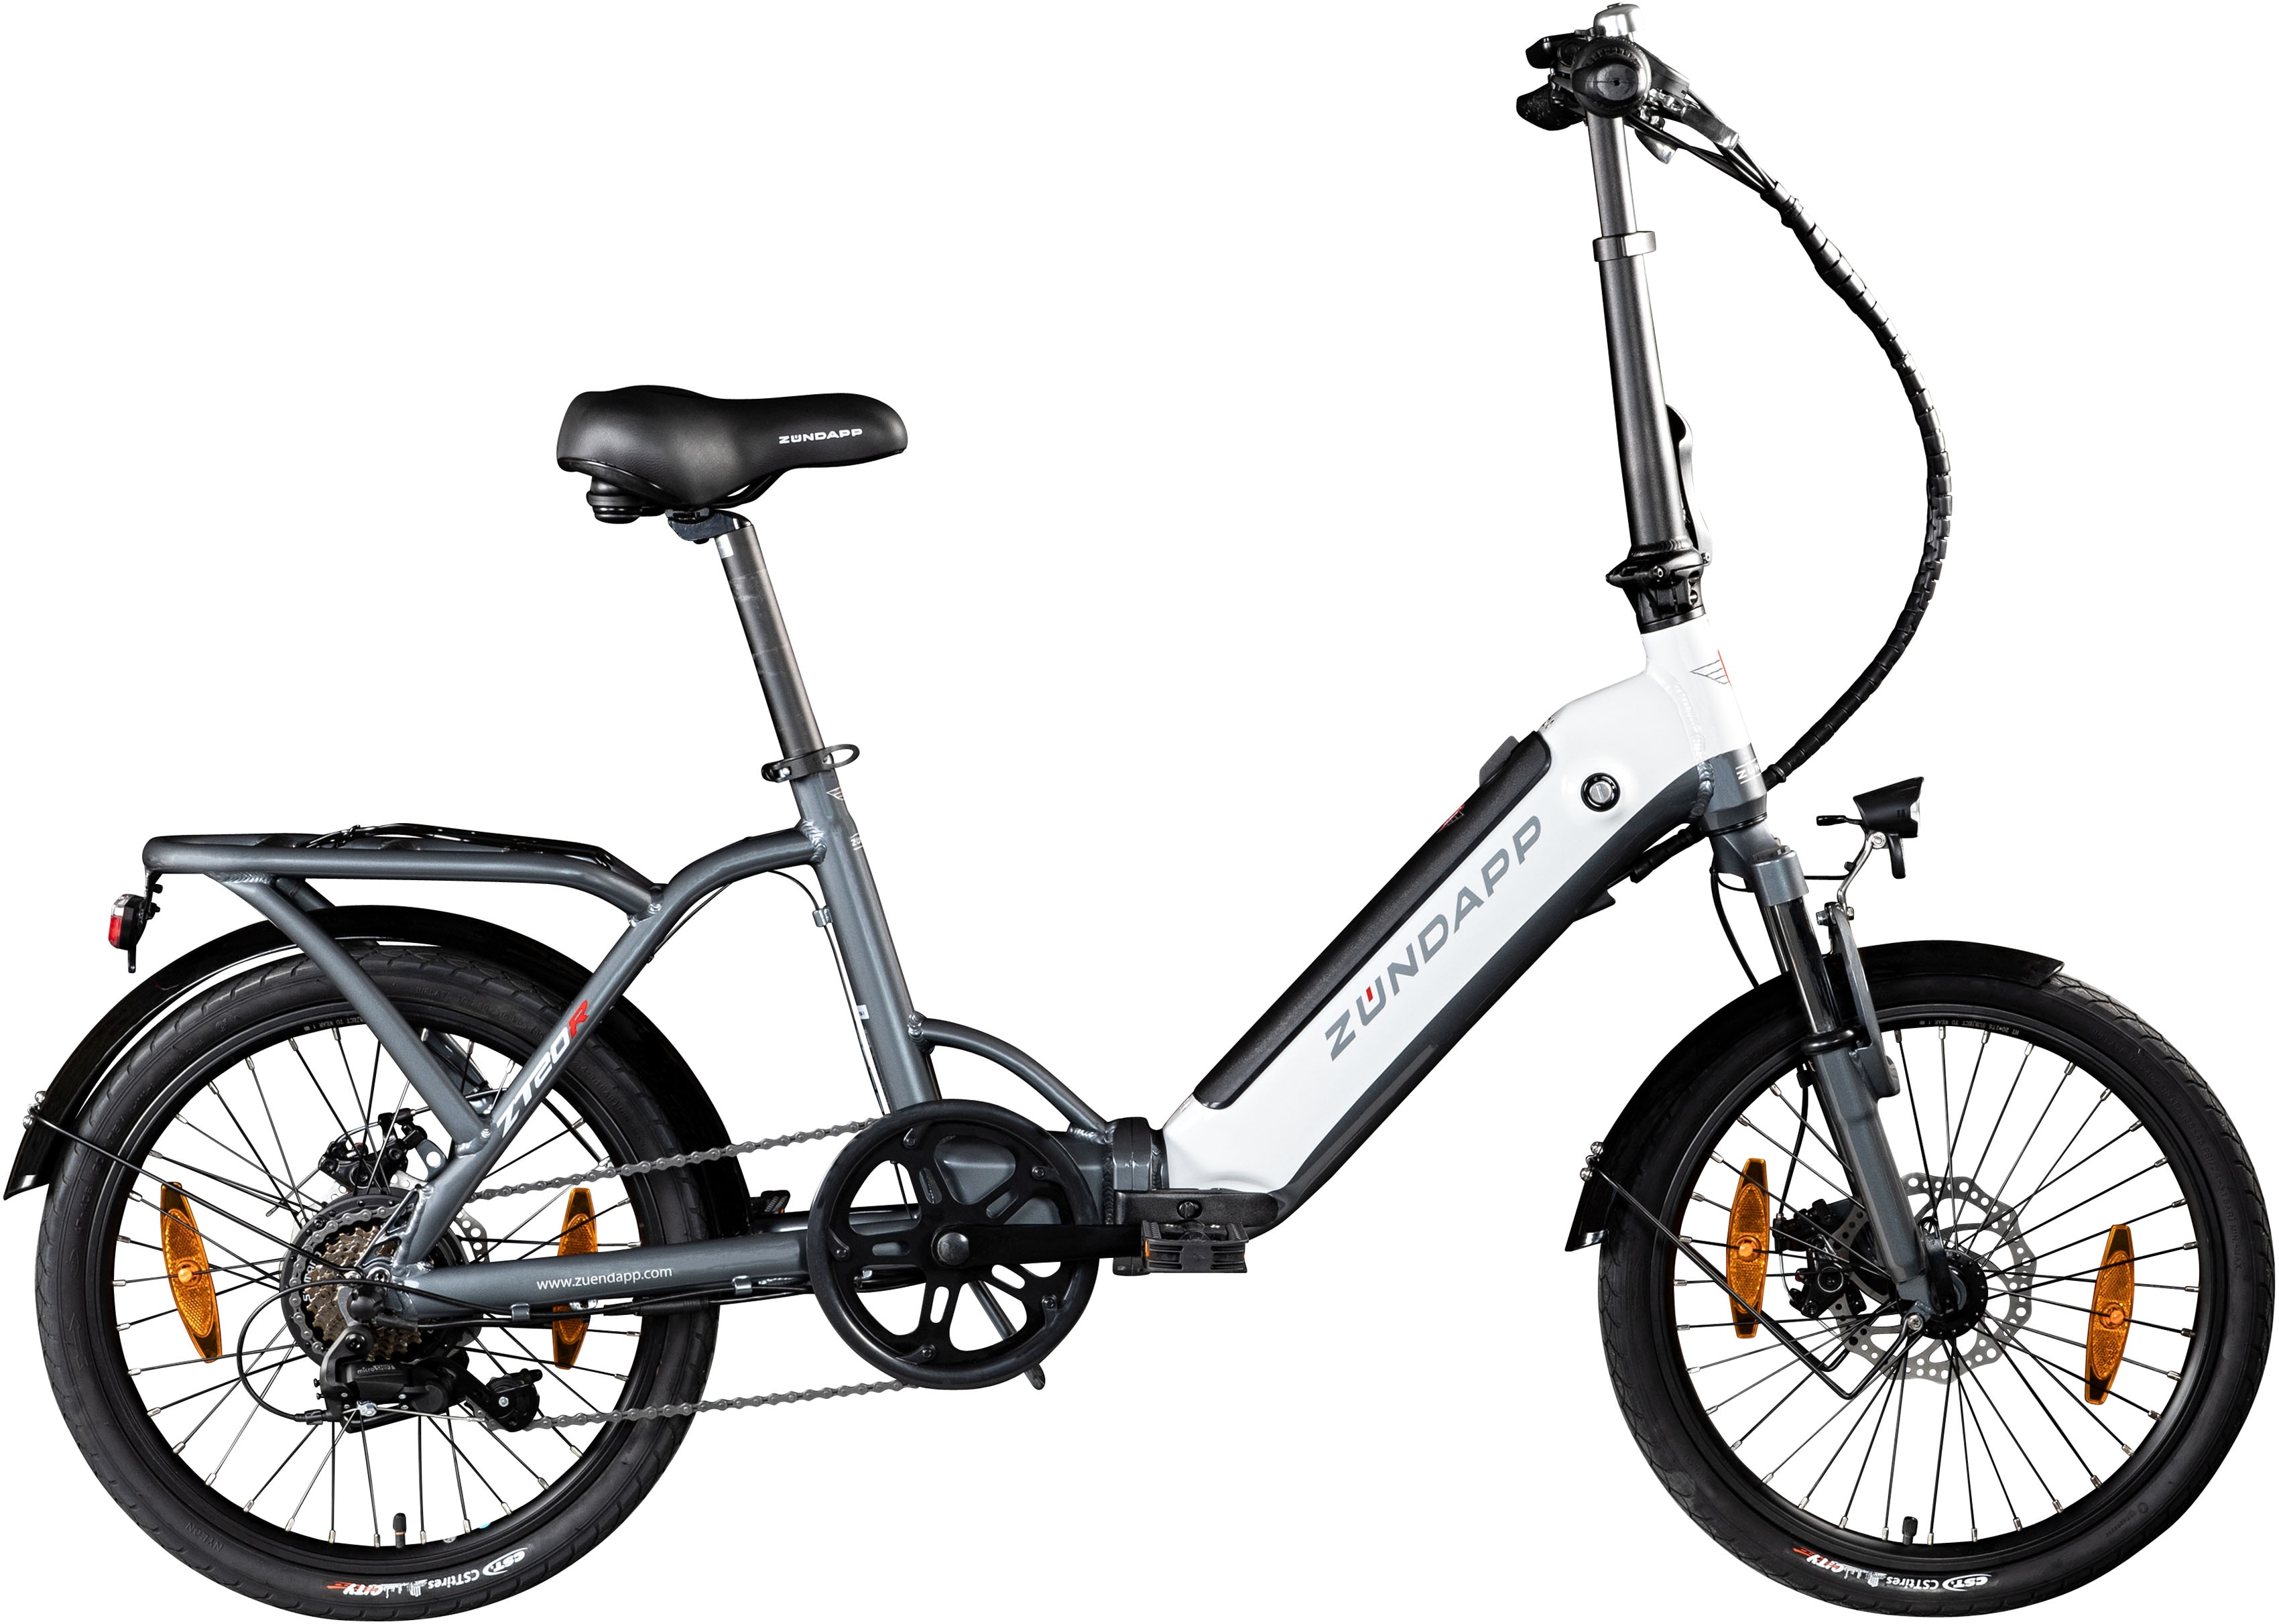 Zündapp E-Bike Faltrad ZT20R 20 Zoll RH 36cm 6-Gang 468 Wh grau grün